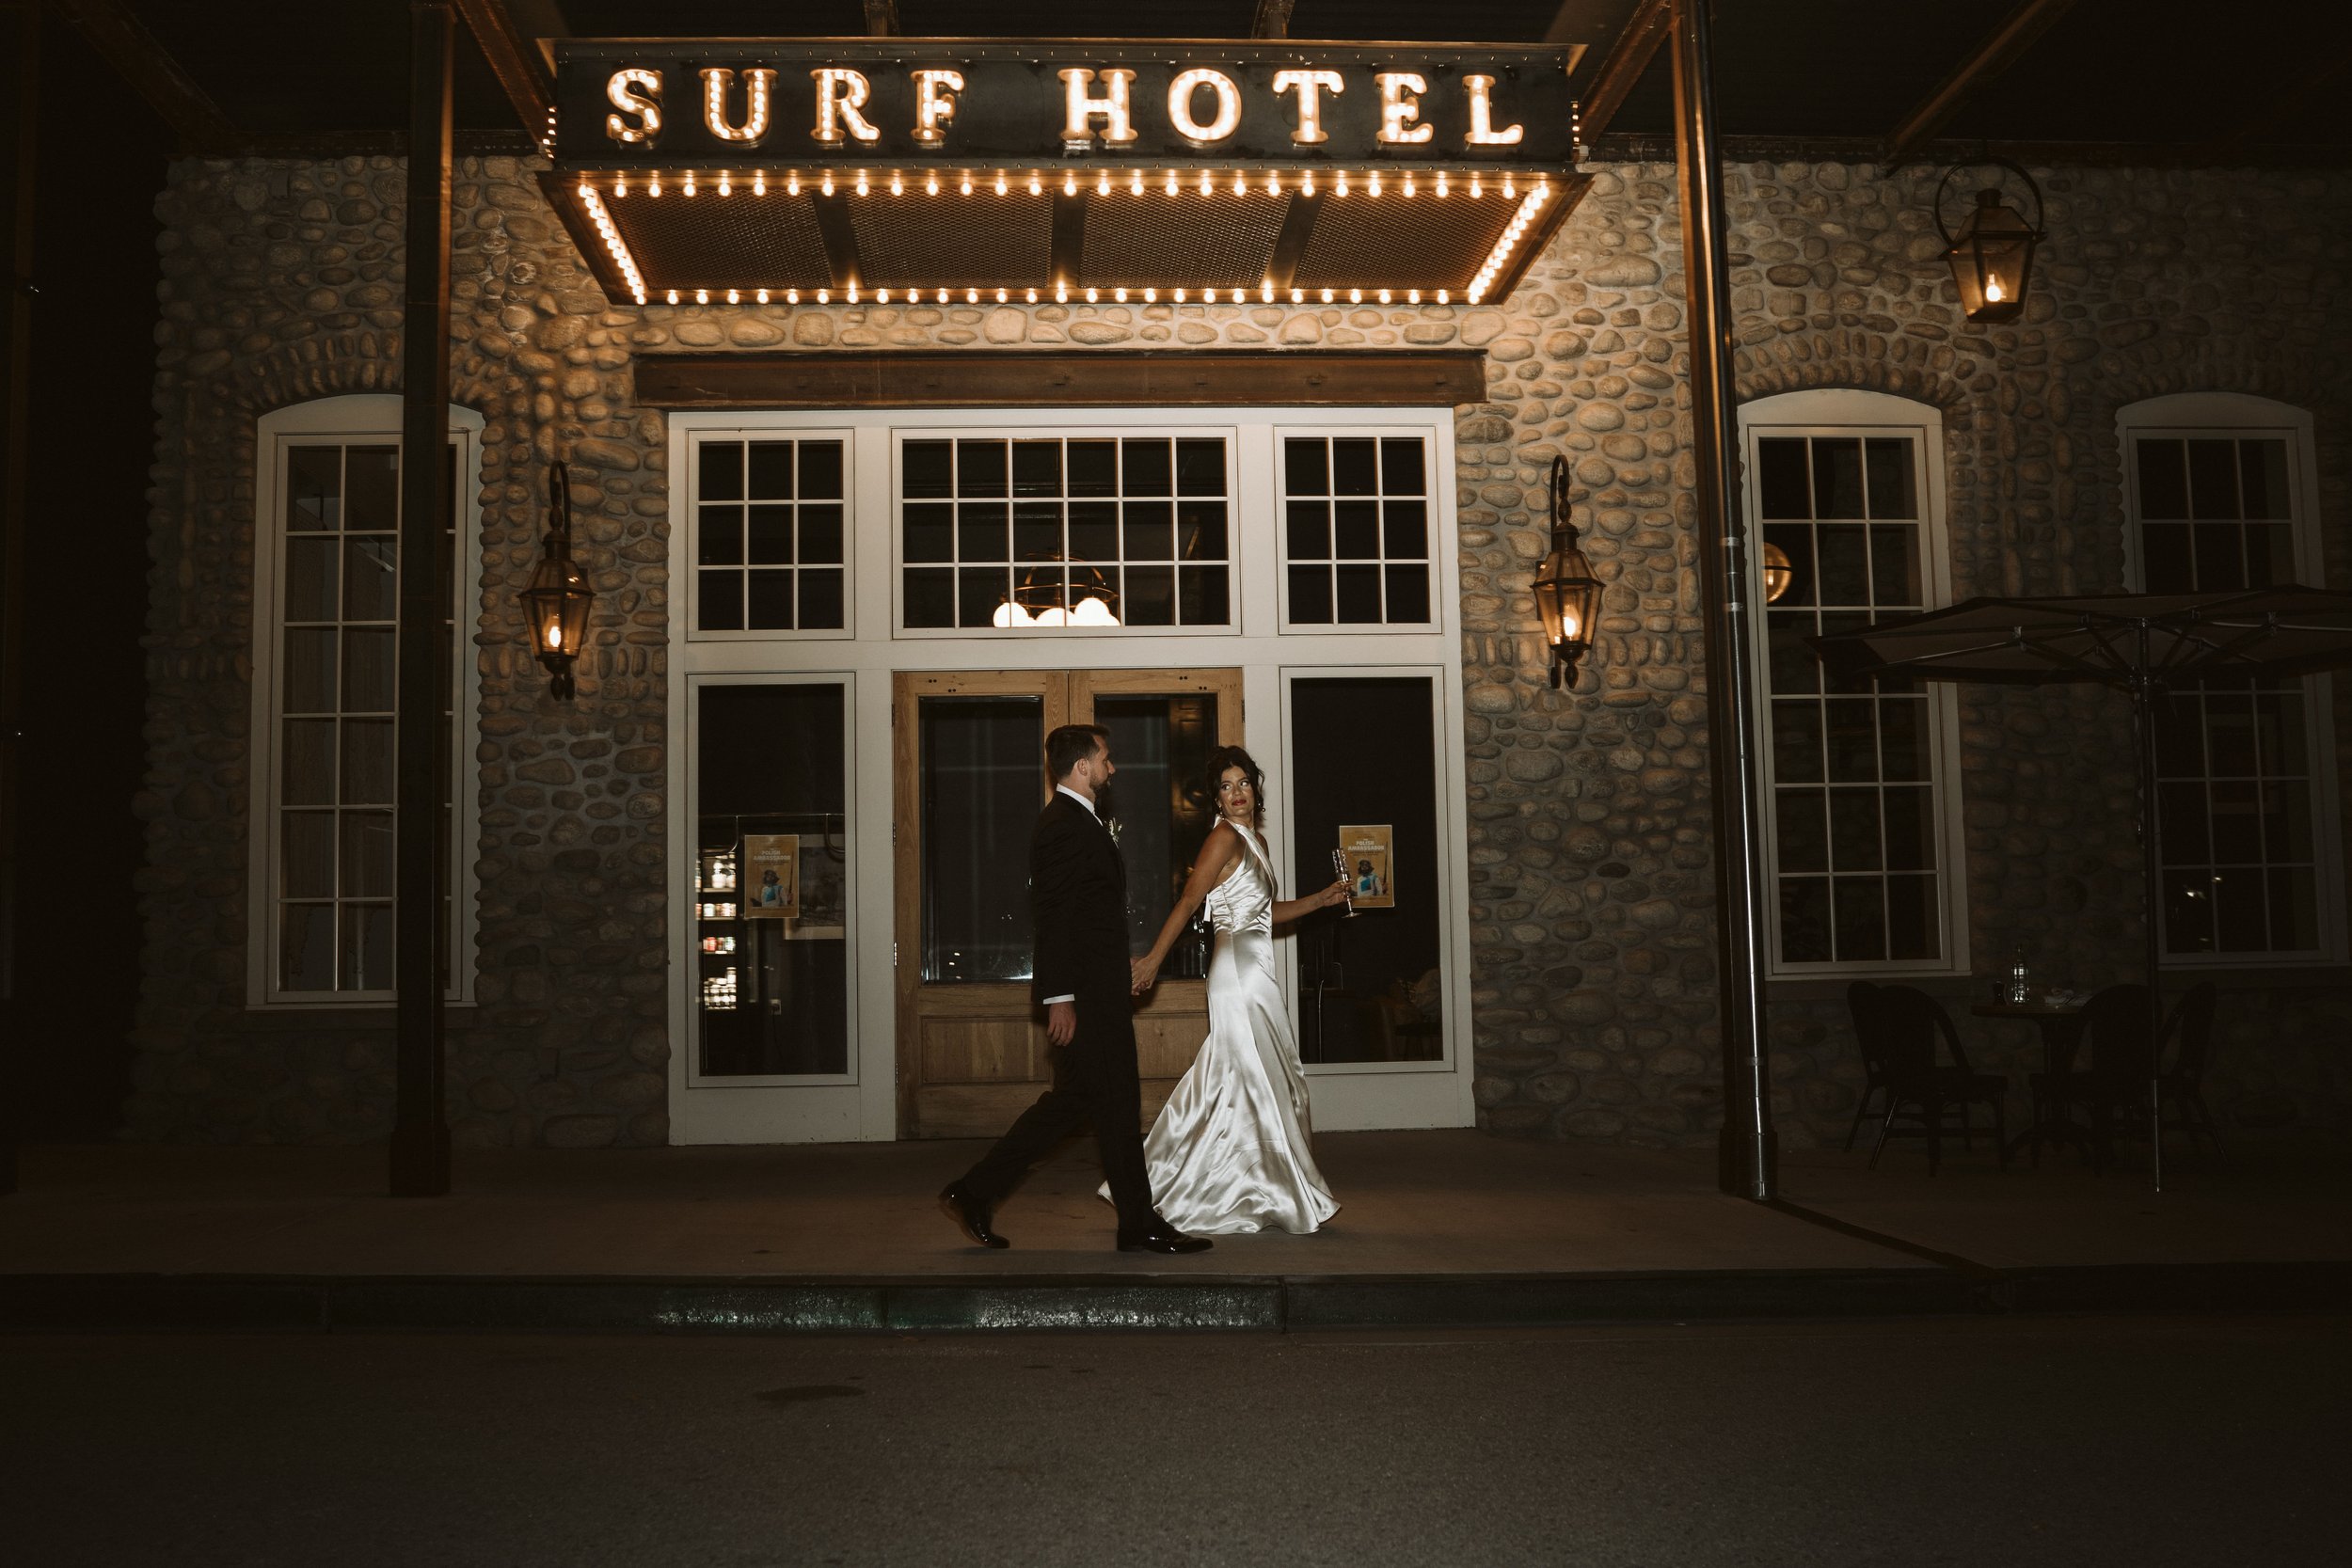 buena-vista-Surf-hotel-wedding-photographer-madeline-j-studios-20220922-204320.jpg